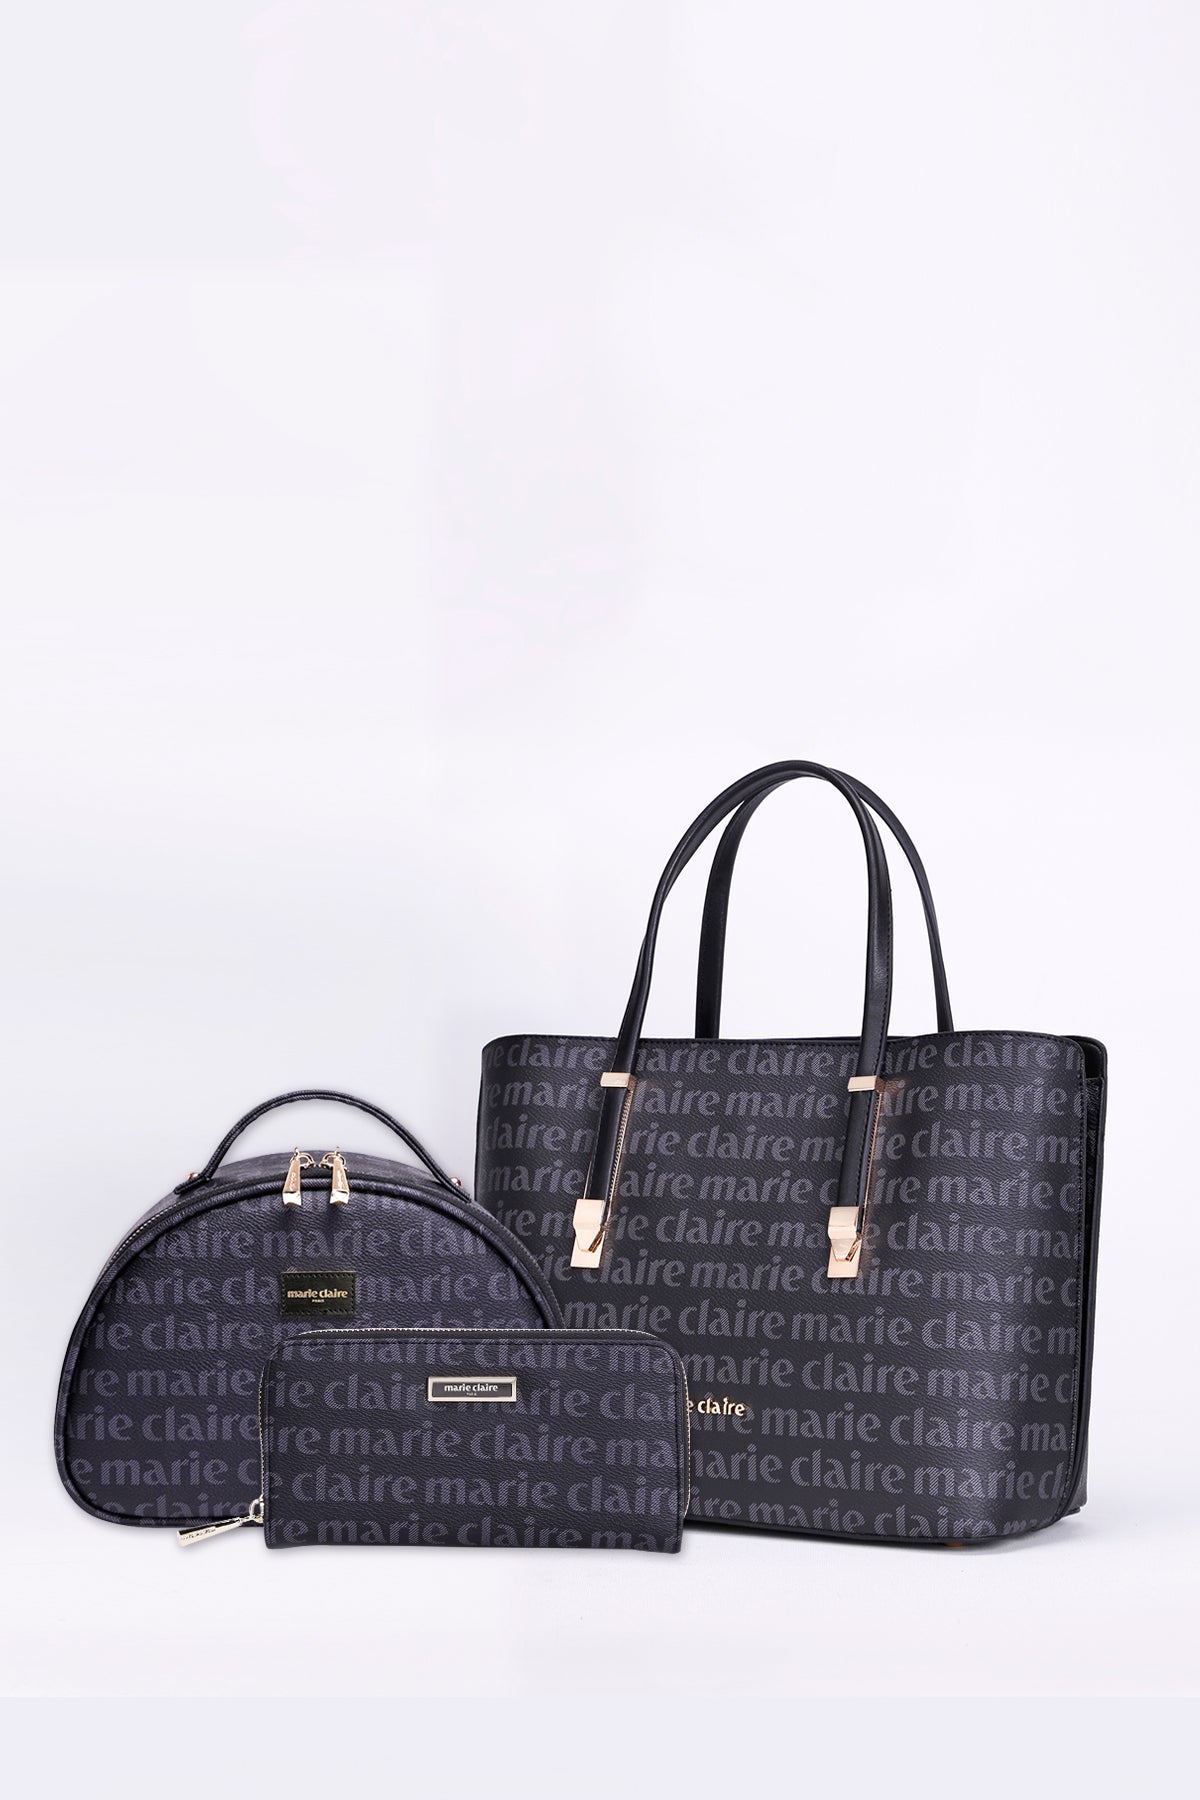 Marie Claire Burgundy Women's Messenger Bag Suzy Artificial Leather Casual  Adjustable Satchel Women Handbag Fashion Stylish price in Dubai, UAE |  Compare Prices